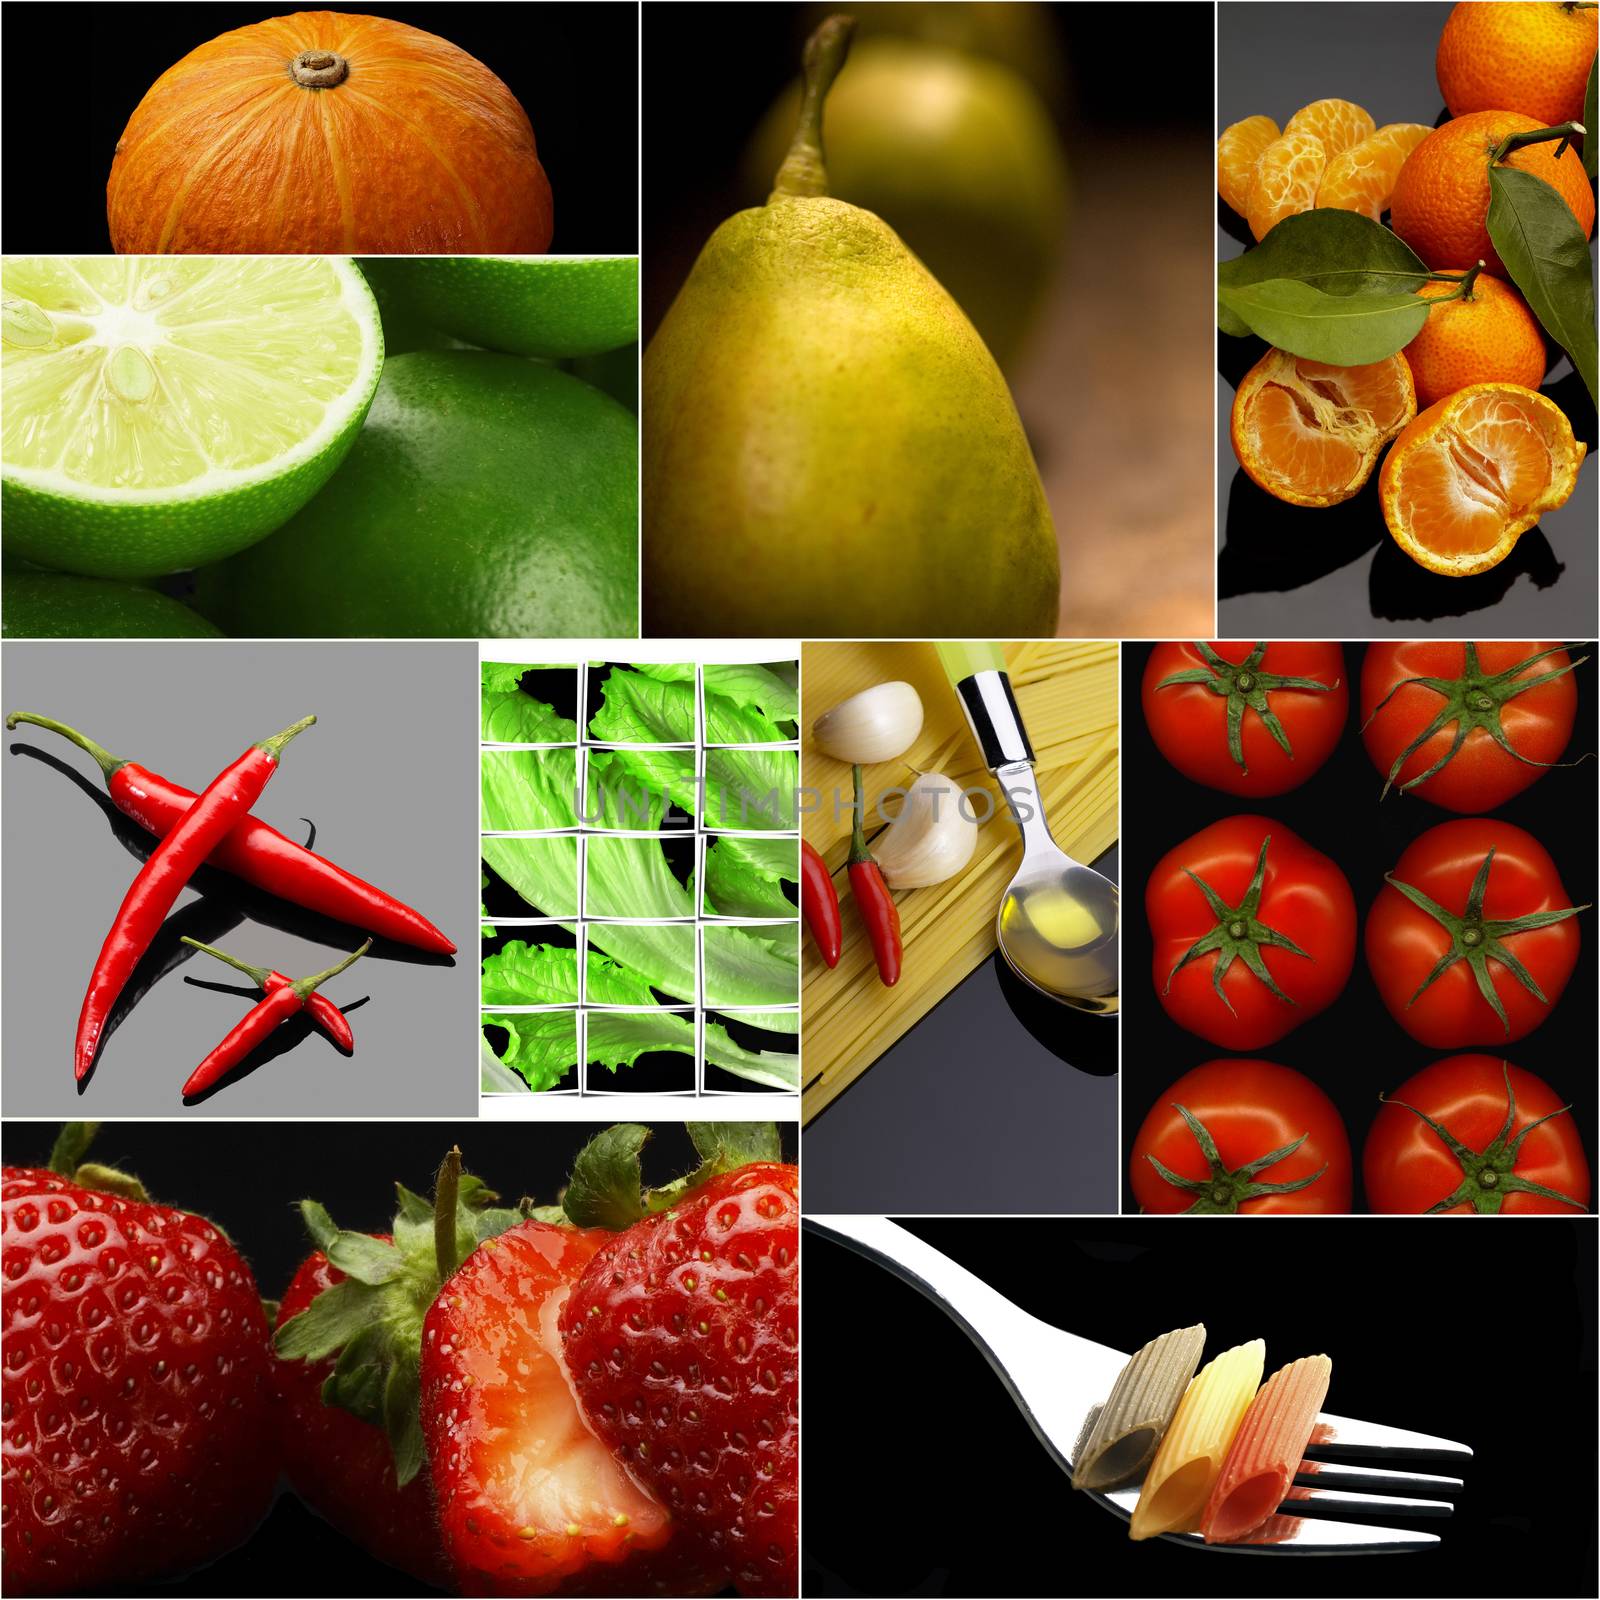 Organic Vegetarian Vegan food collage  dark  by keko64